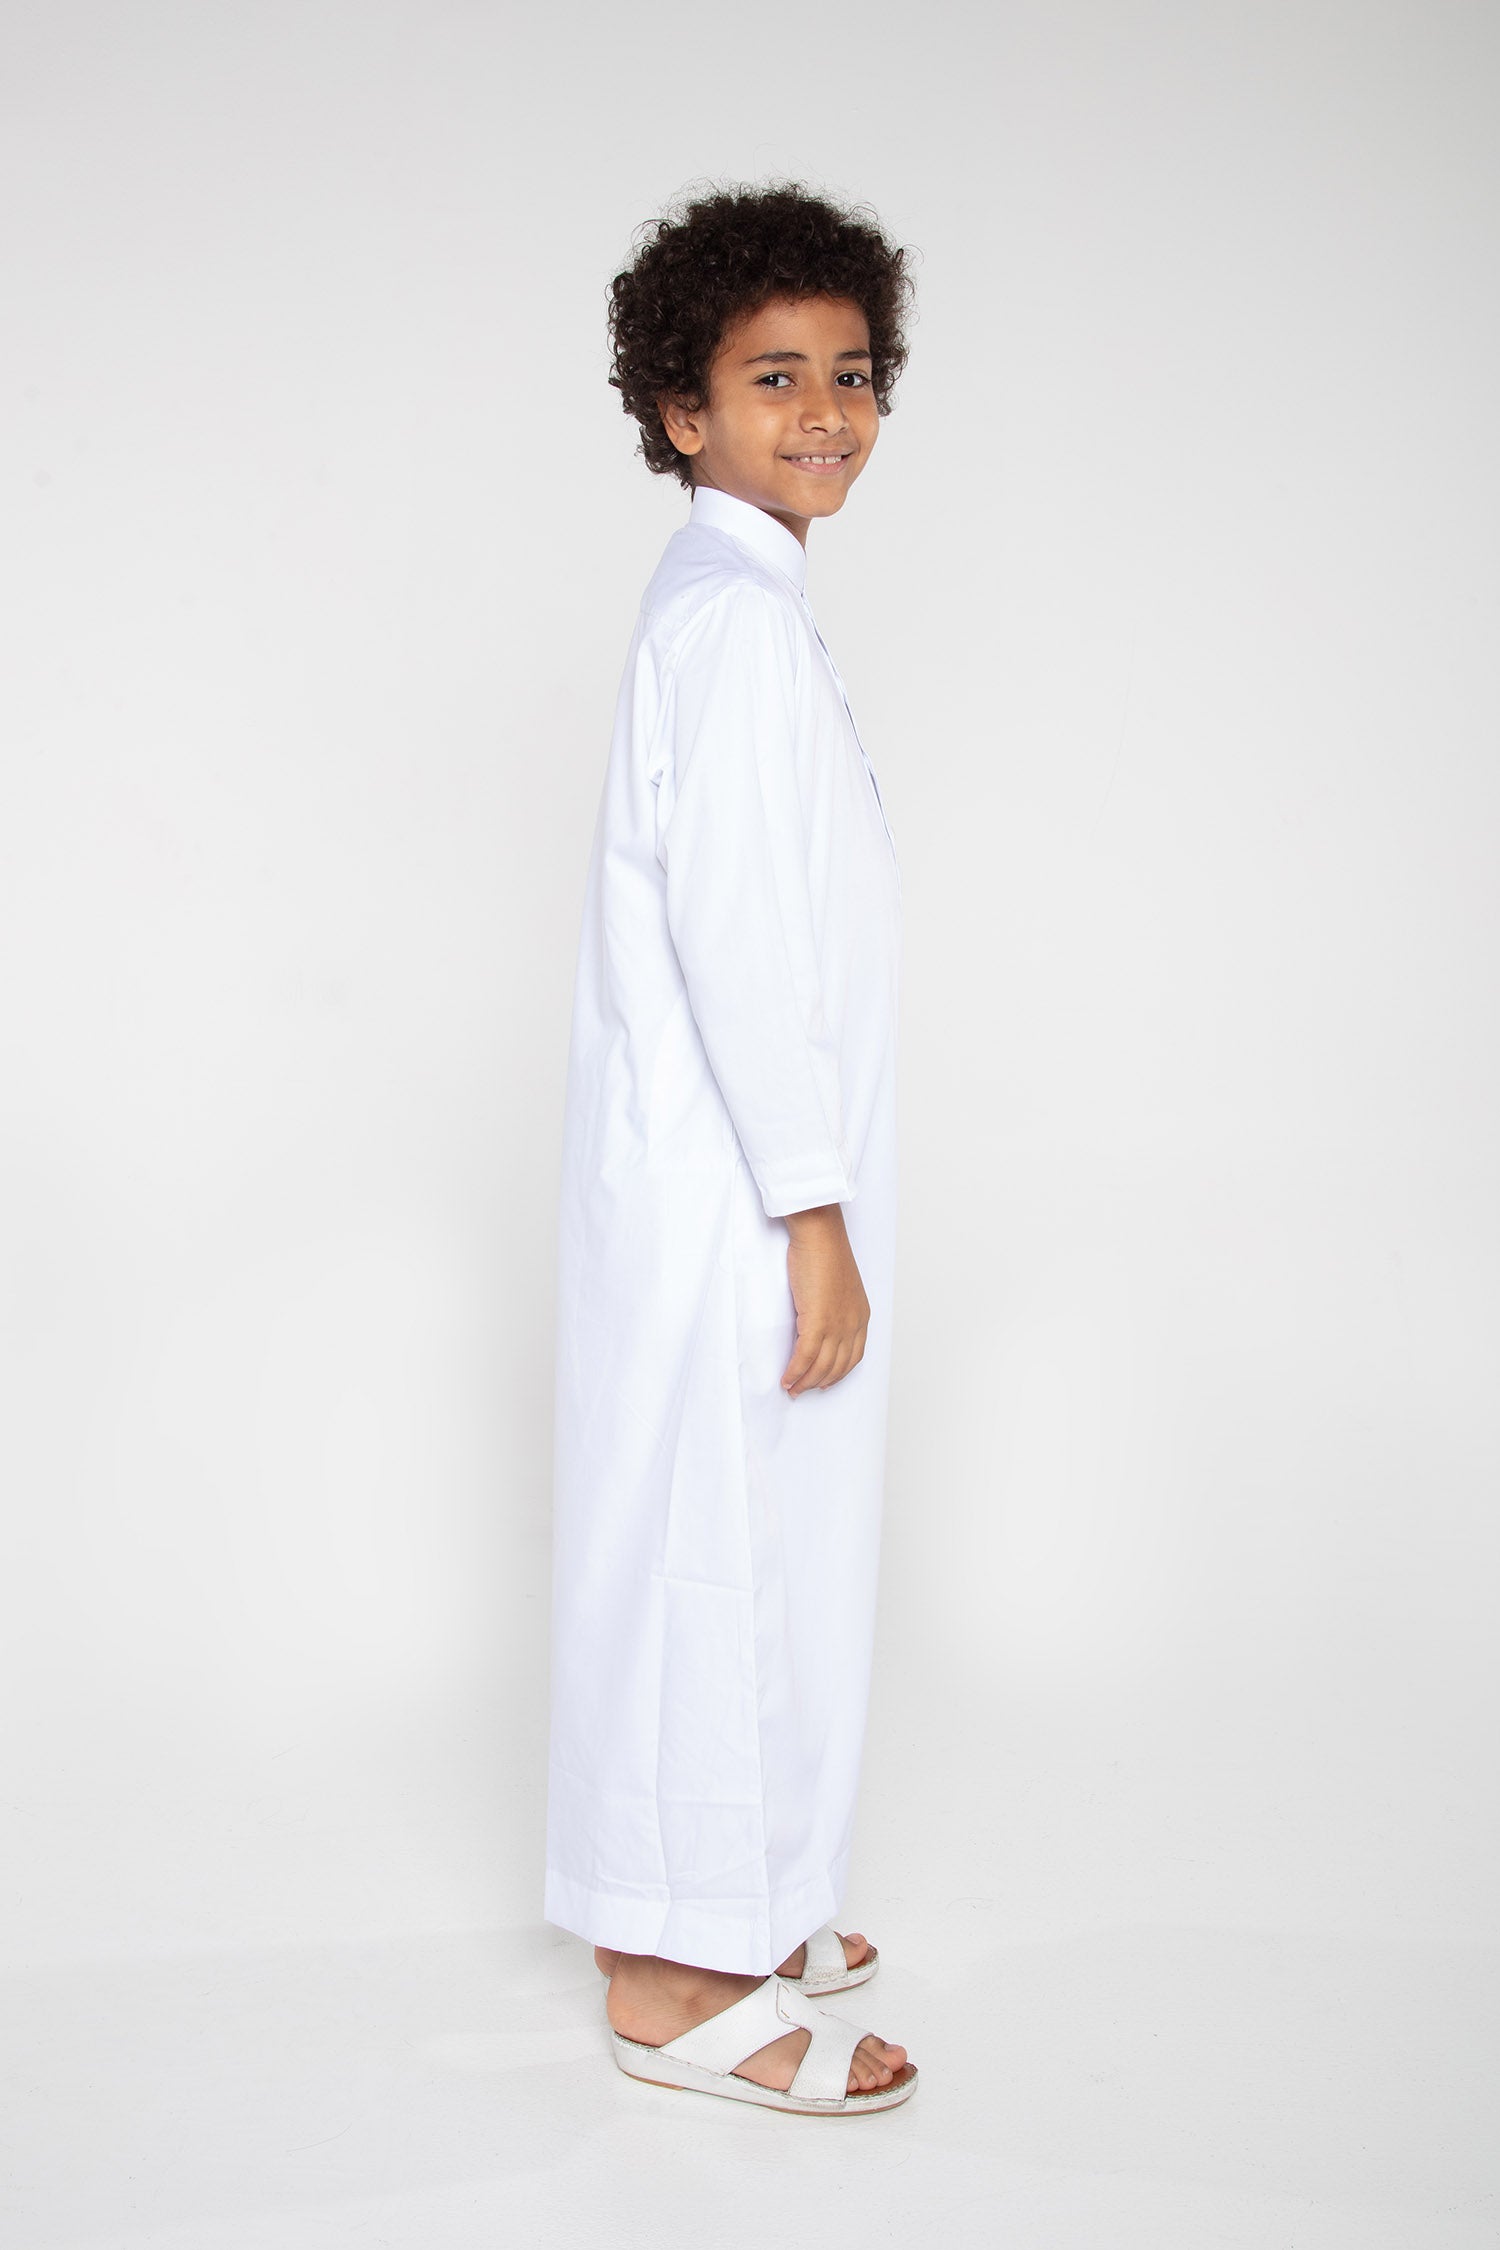 Haramain Style Soft Collar Kids - JLifestyle Store